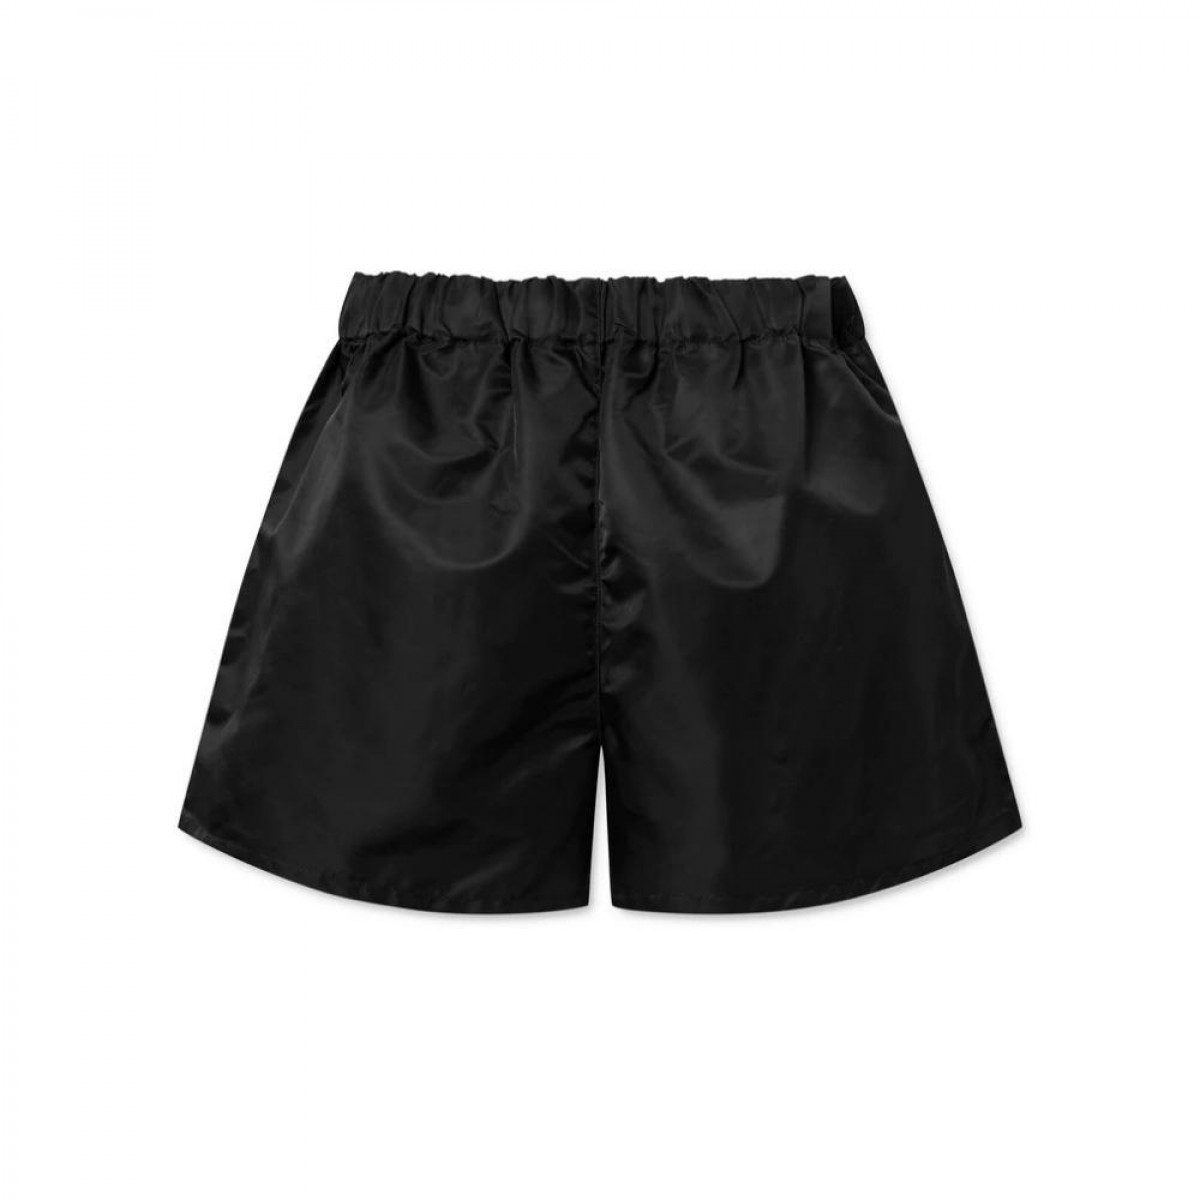 alessio shorts - black - bag